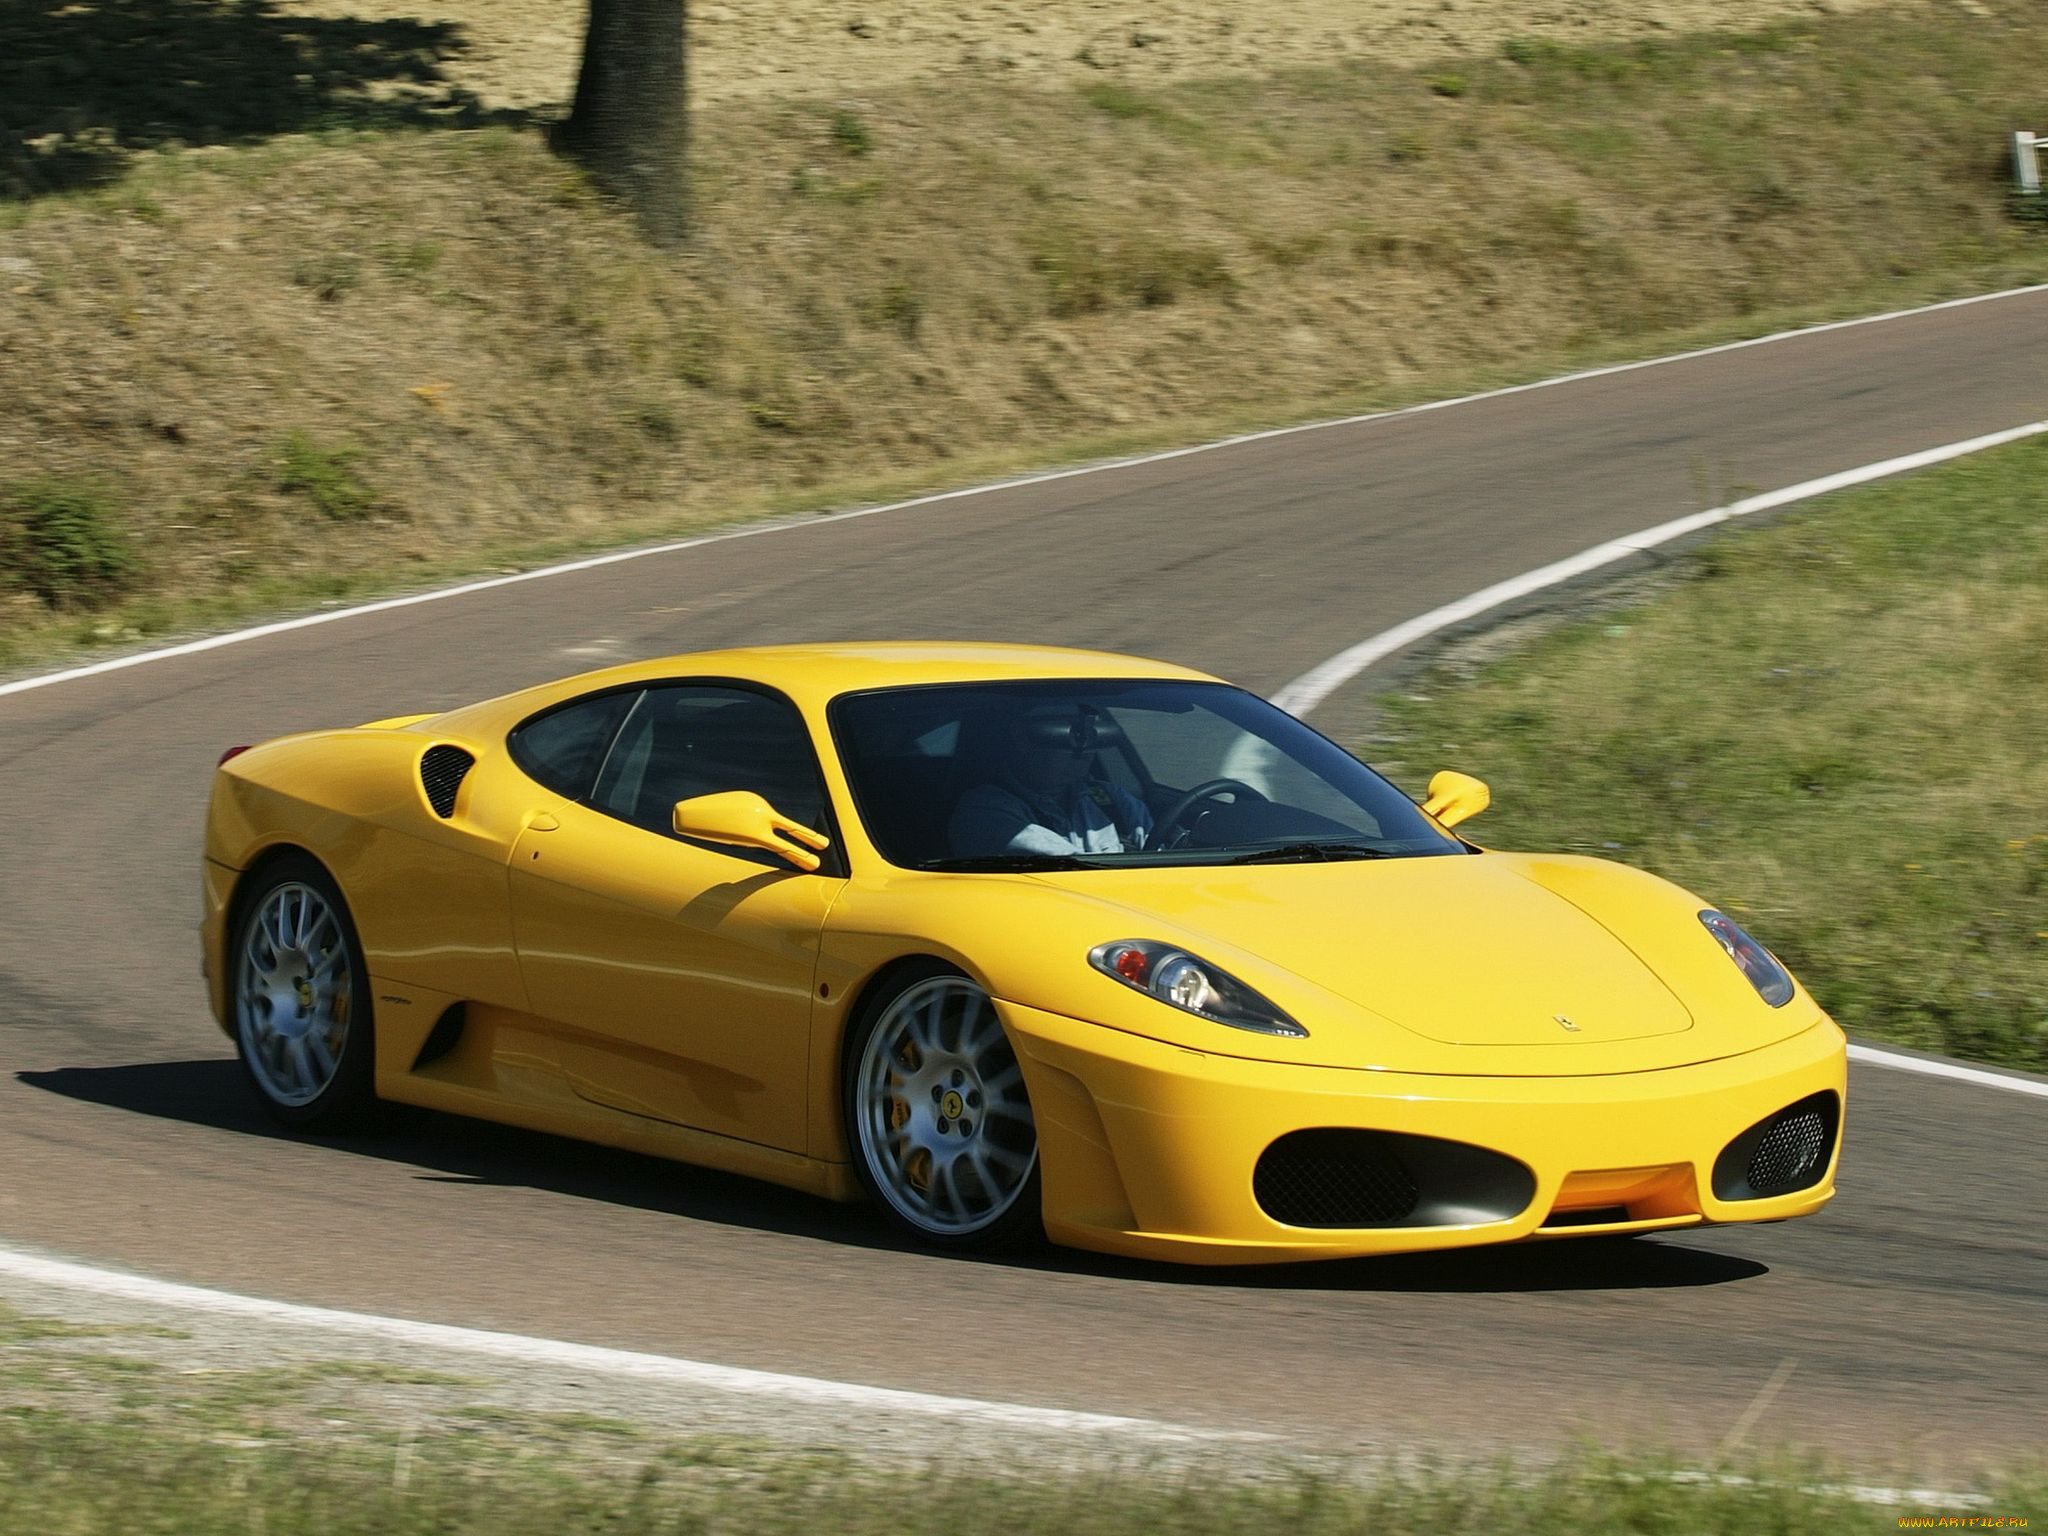 Ferrari x. Ferrari f430 желтая. Феррари ф430. Ferrari 430. Ferrari f430 Scuderia Yellow.